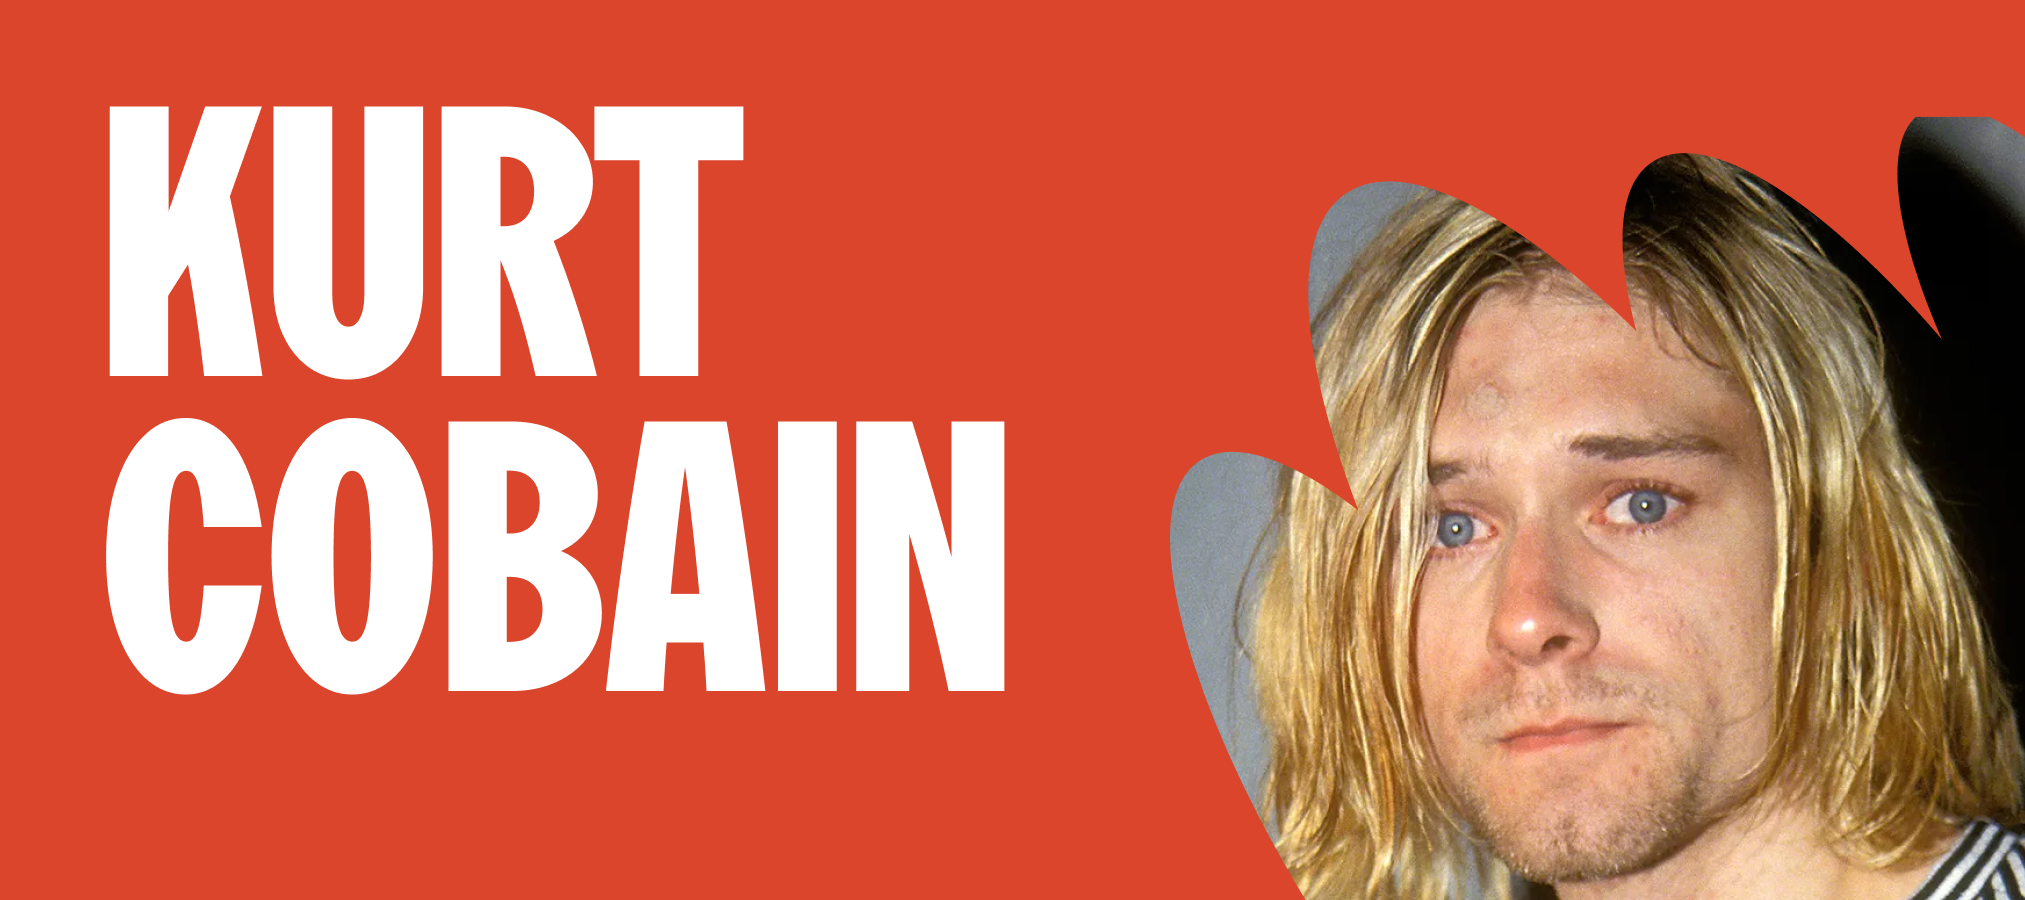 Kurt Cobain: The voice of a generation